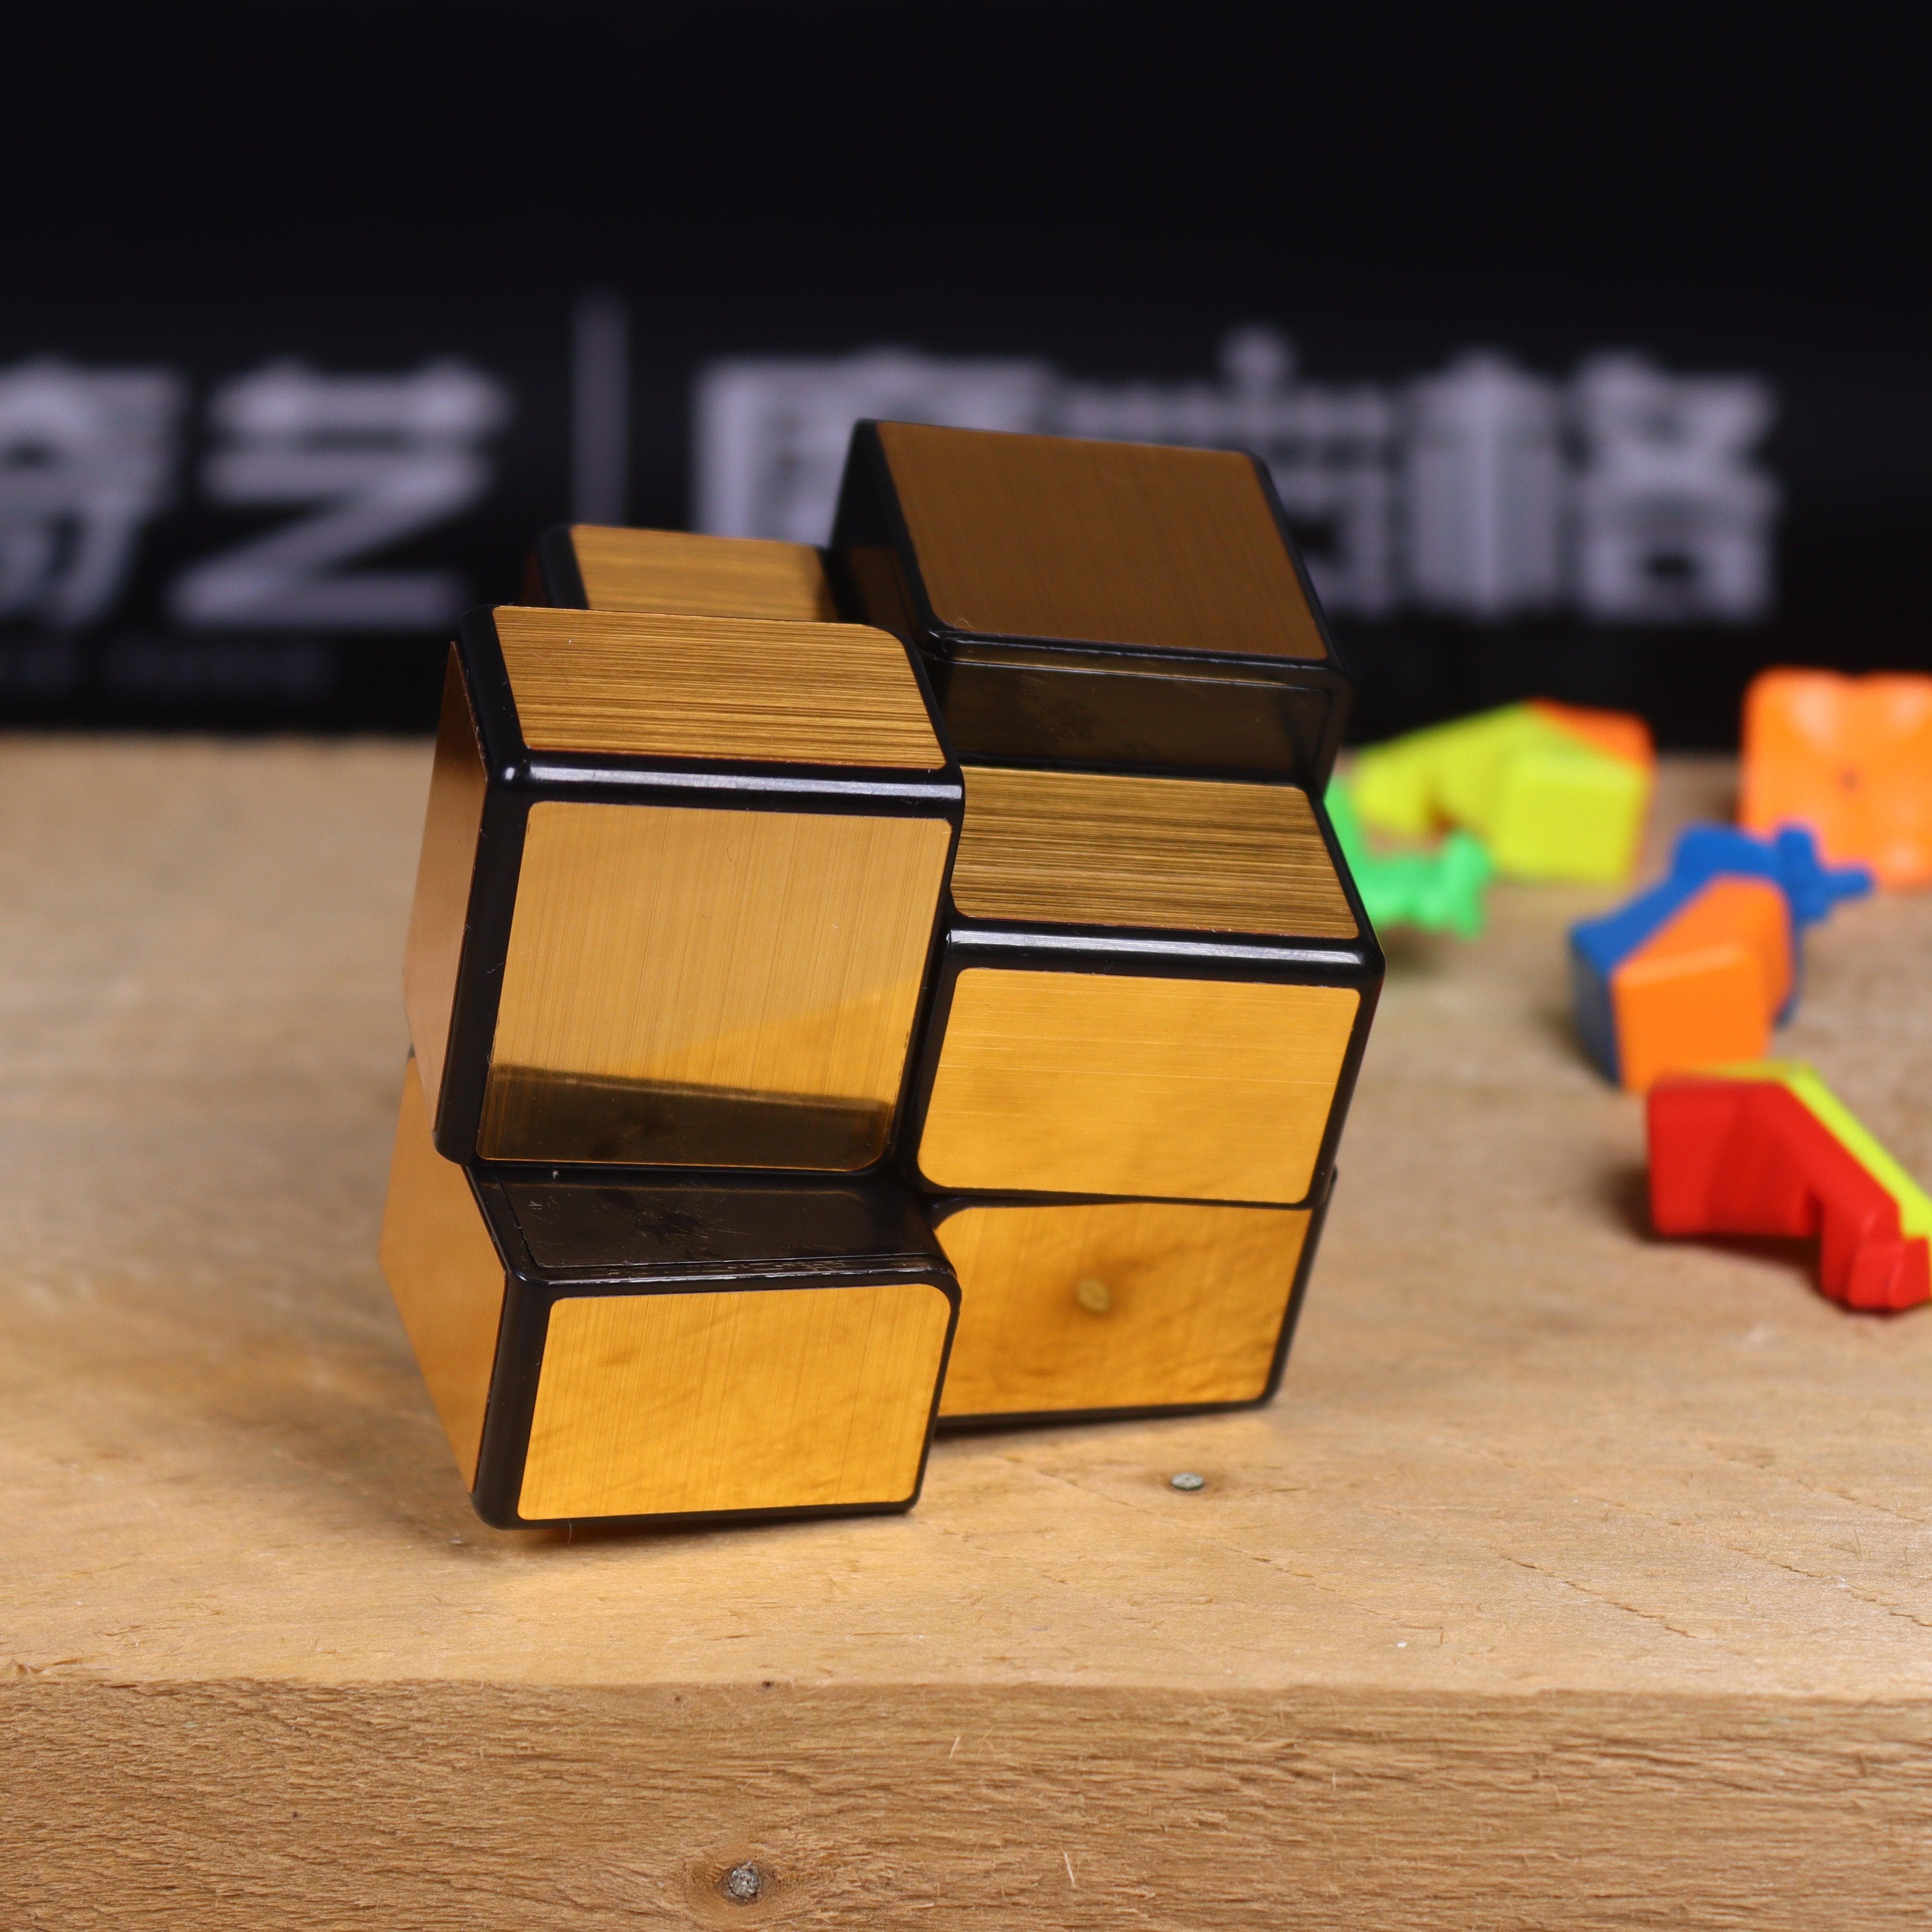 Rubik's cube 3x3 QiYi Mirror